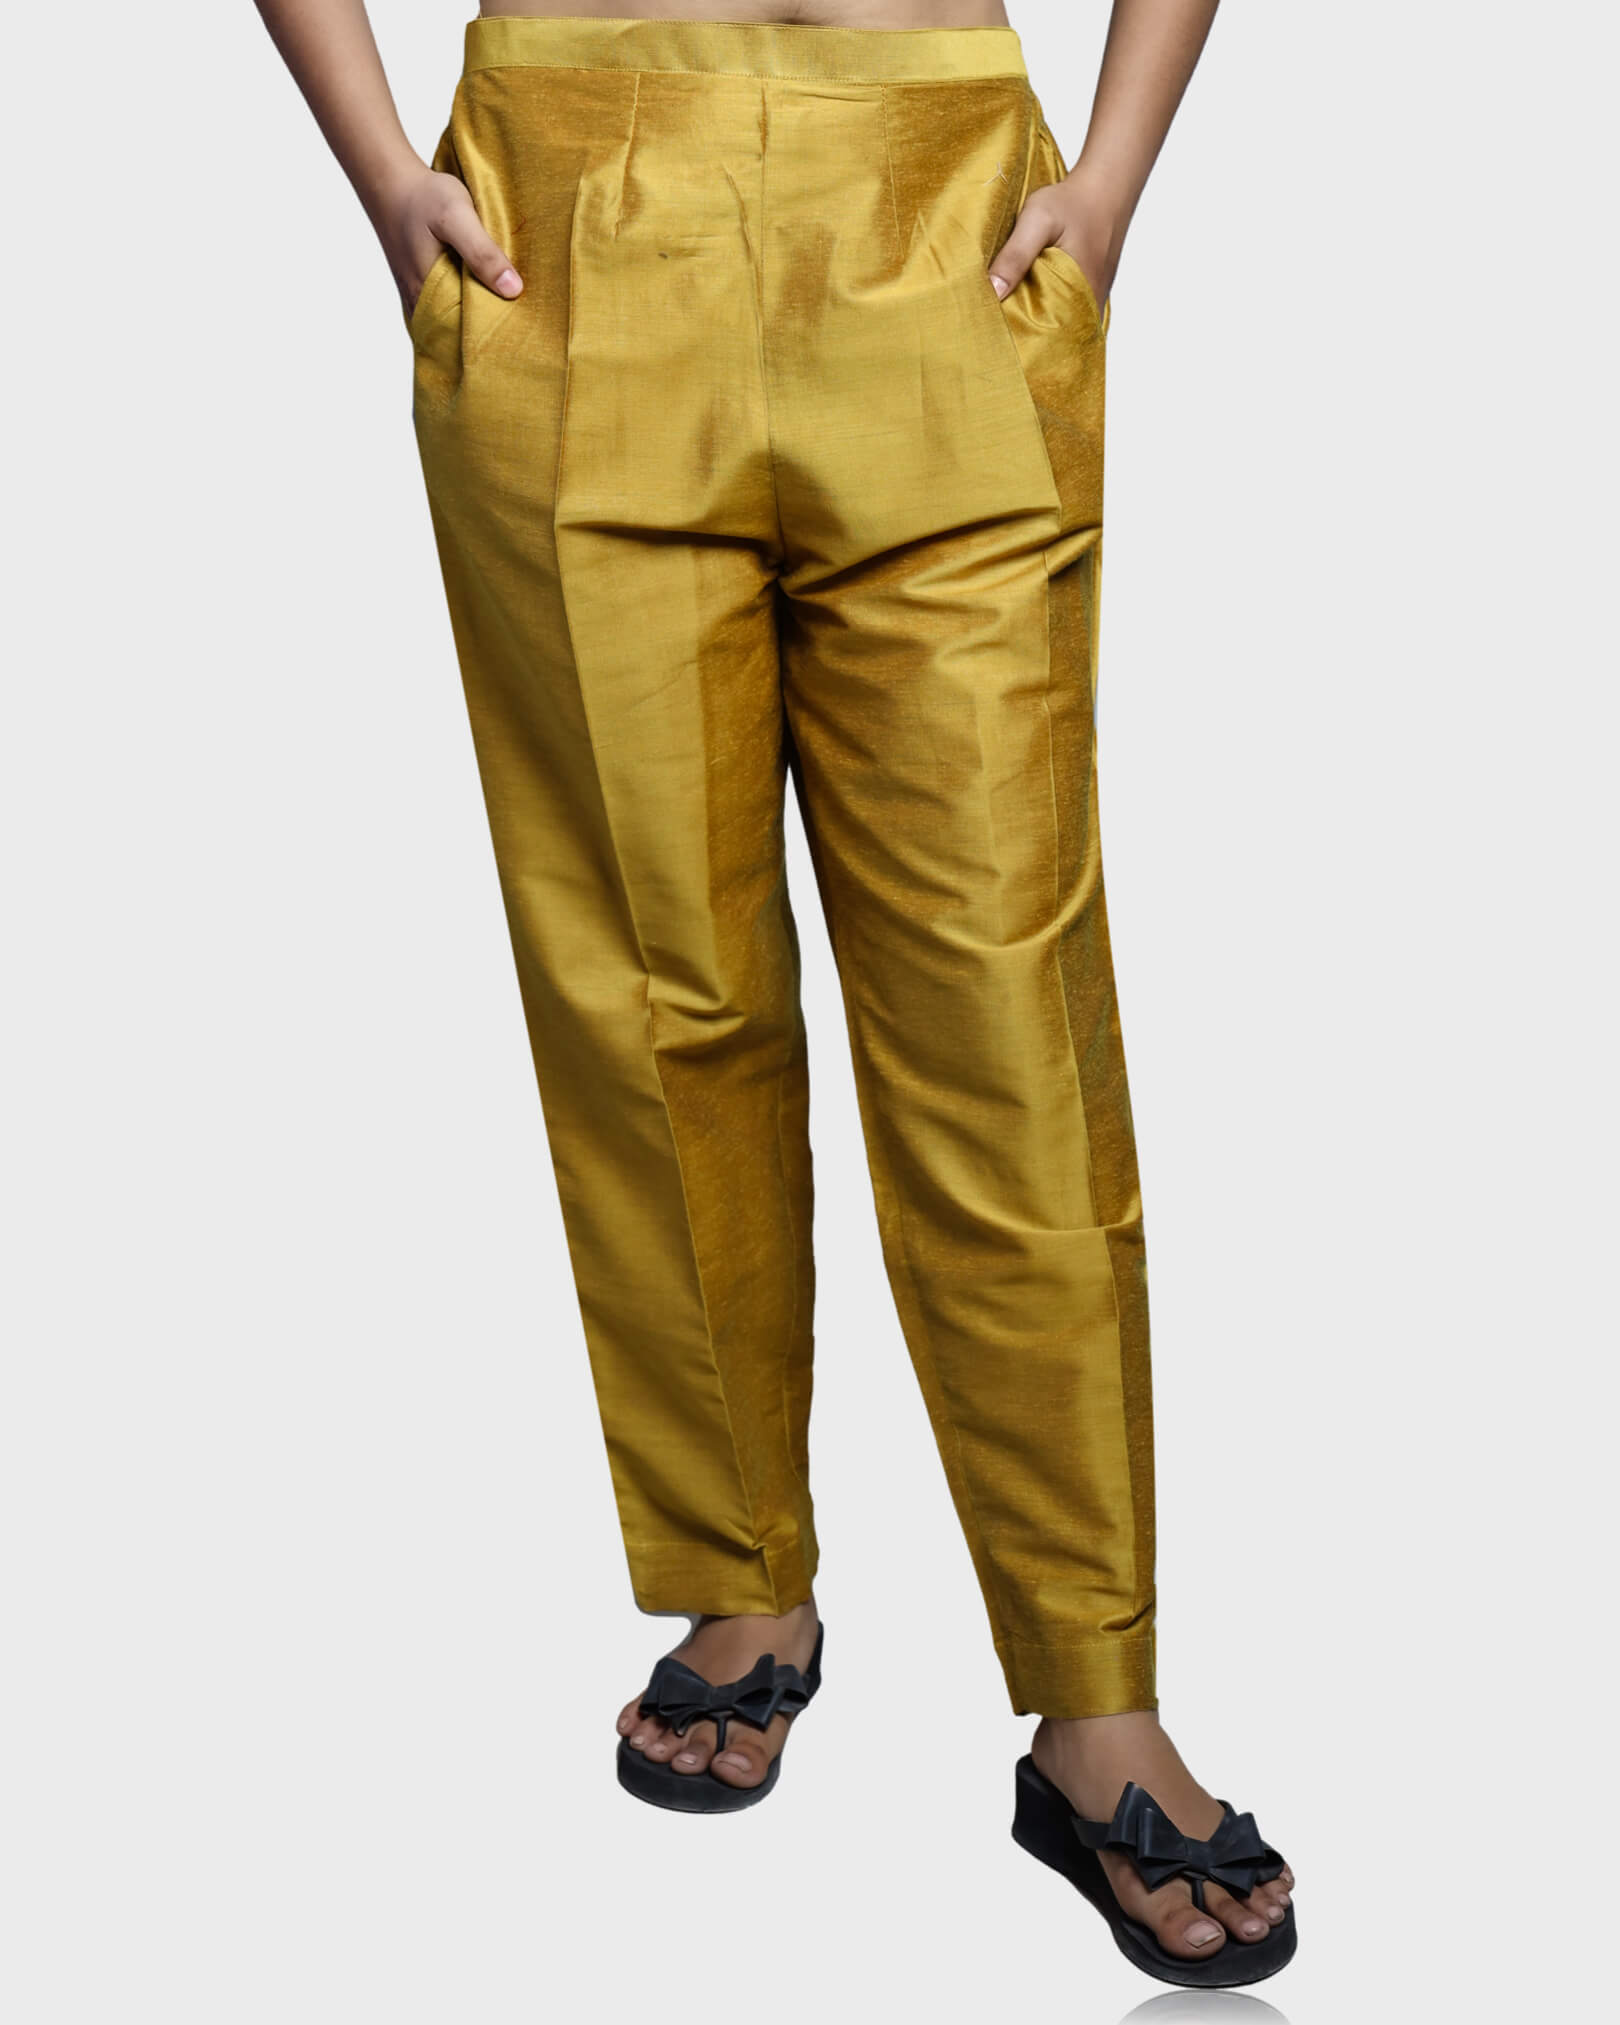 Buy DEVS AND DIVAS Golden Taffeta Silk Pants Trouser for Women Online  Get  78 Off